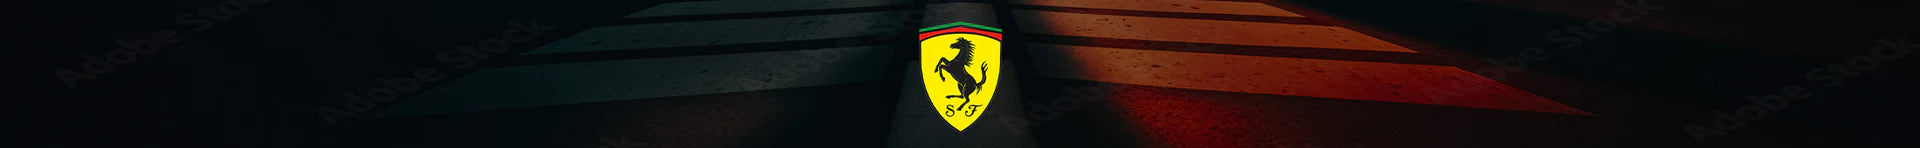 Ferrari Hypercar